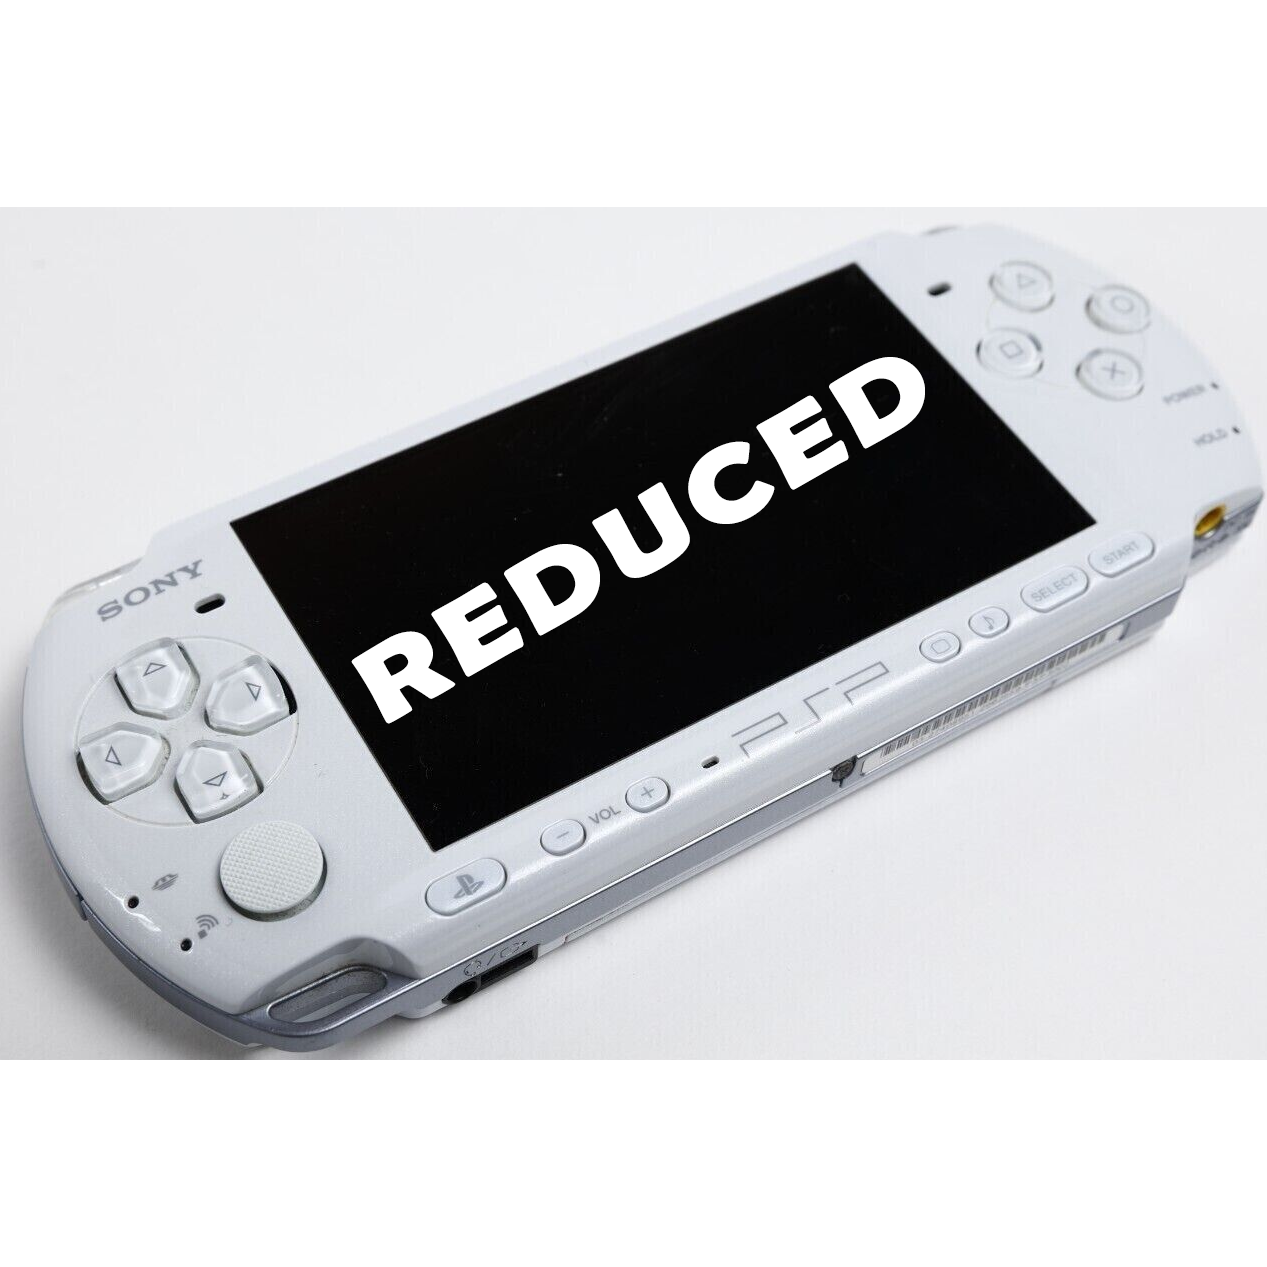 PSP System - Model 3000 (Pearl White / Minor Screen Damage)